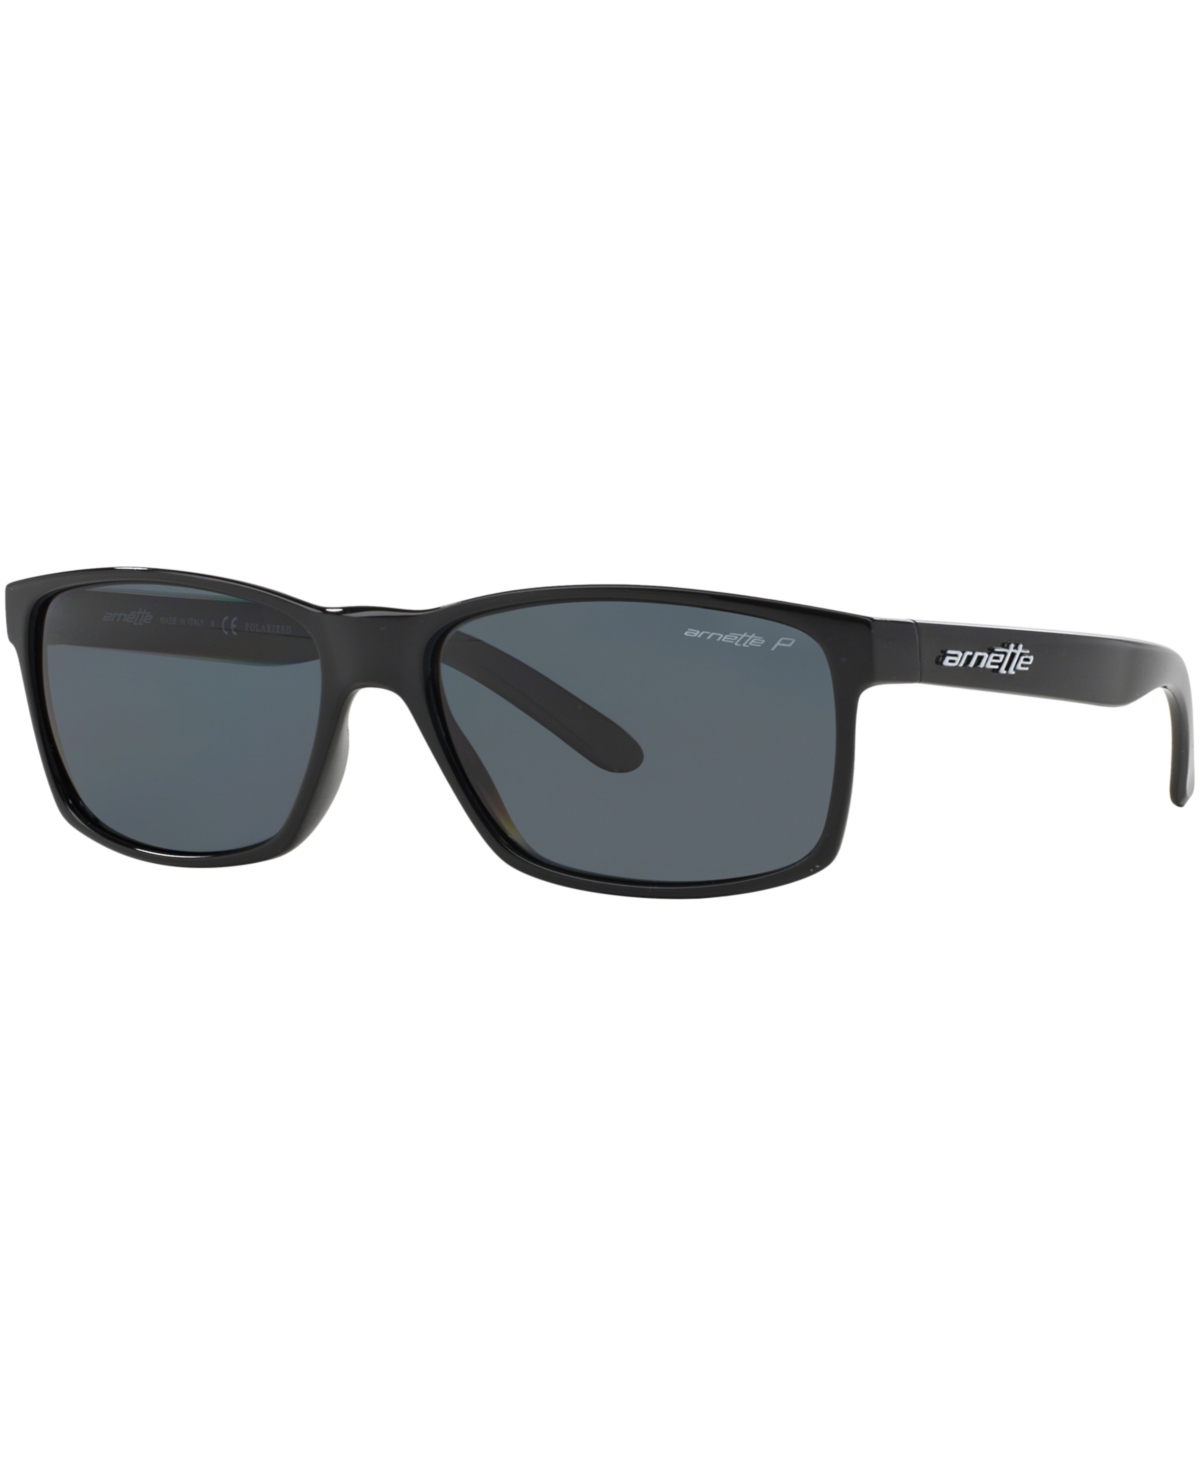 Polarized Sunglasses , AN4185 Slickster - Black/Grey